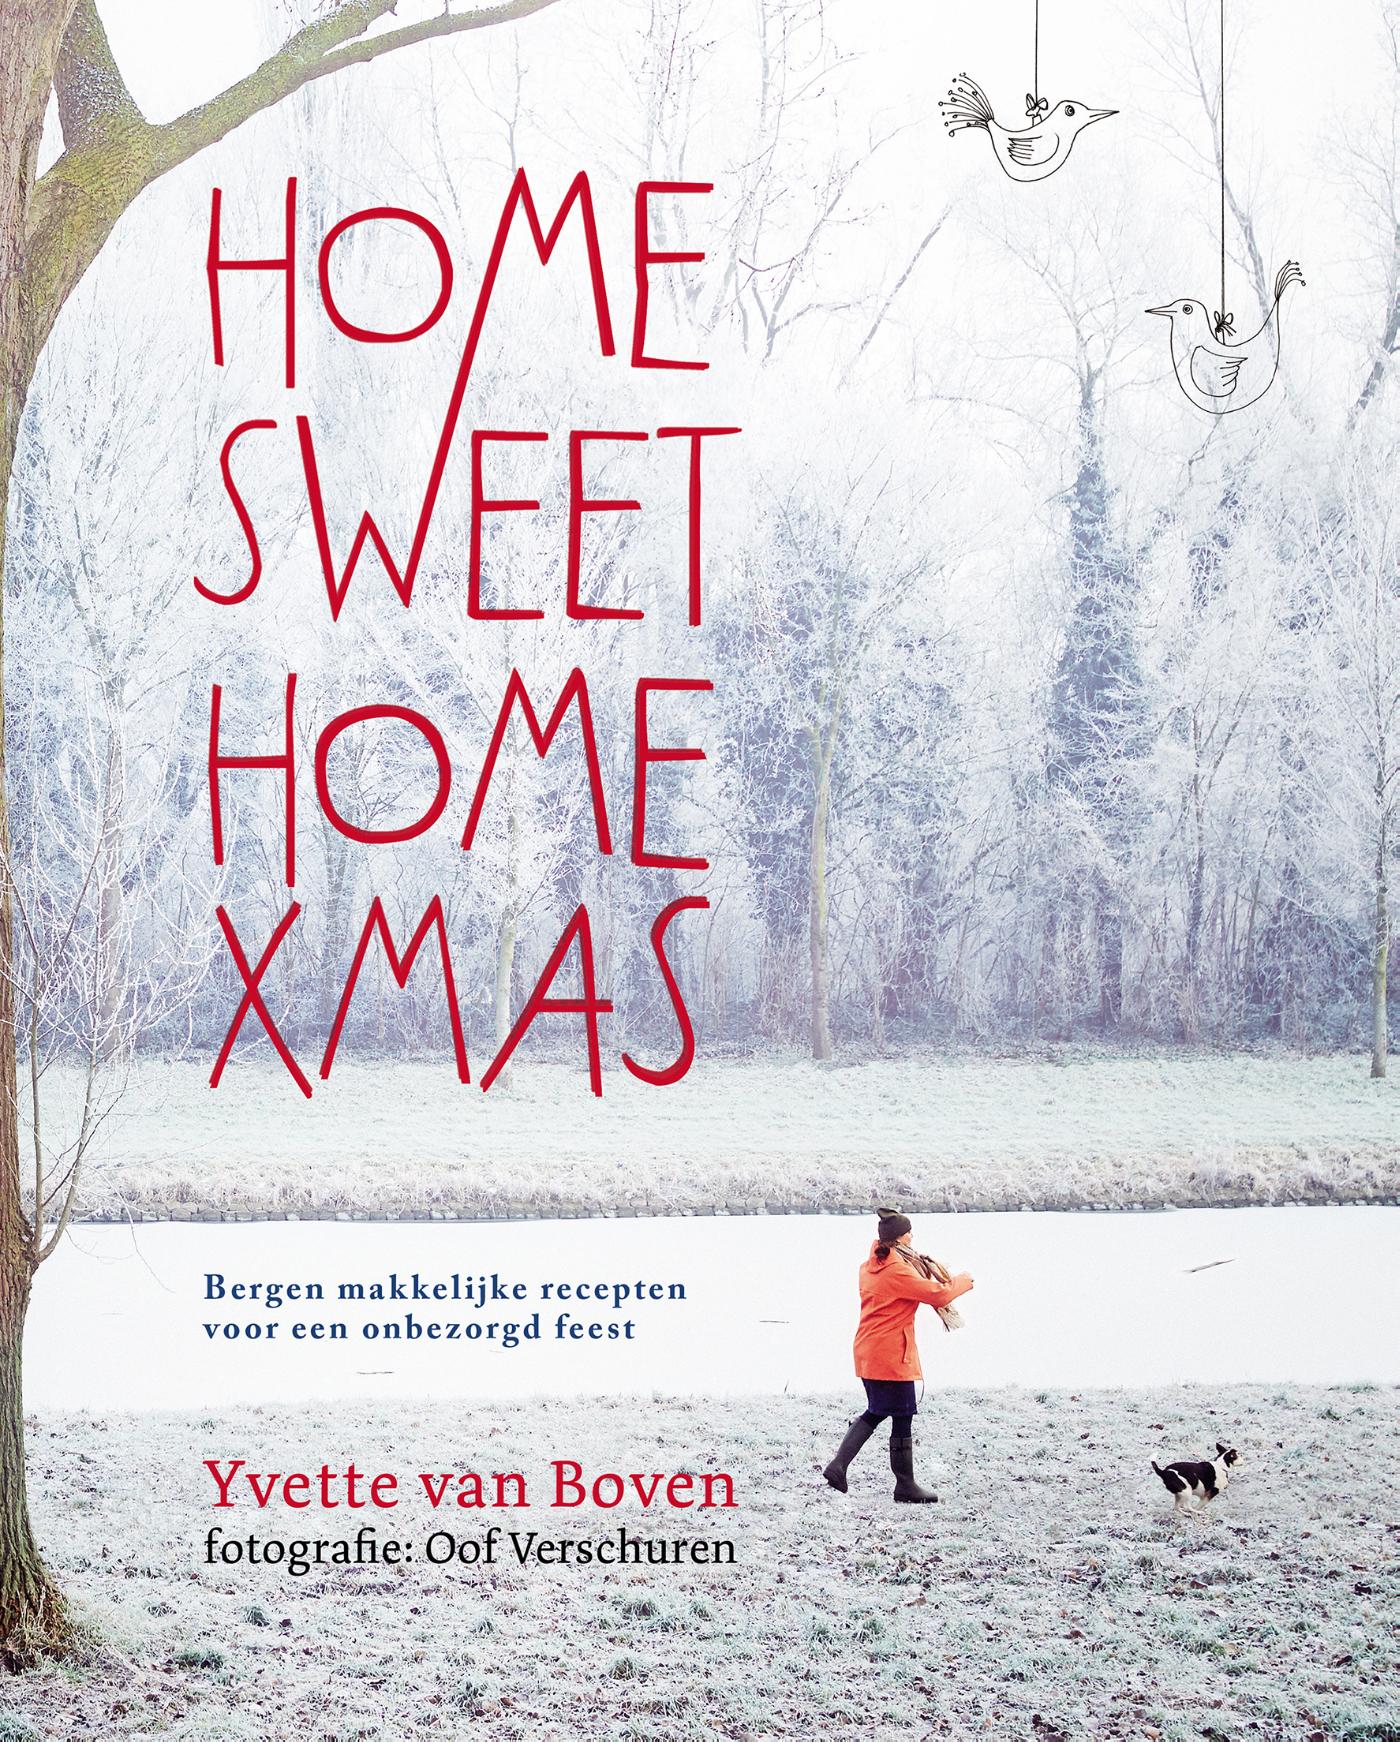 Yvette van Boven - Home sweet home Xmas